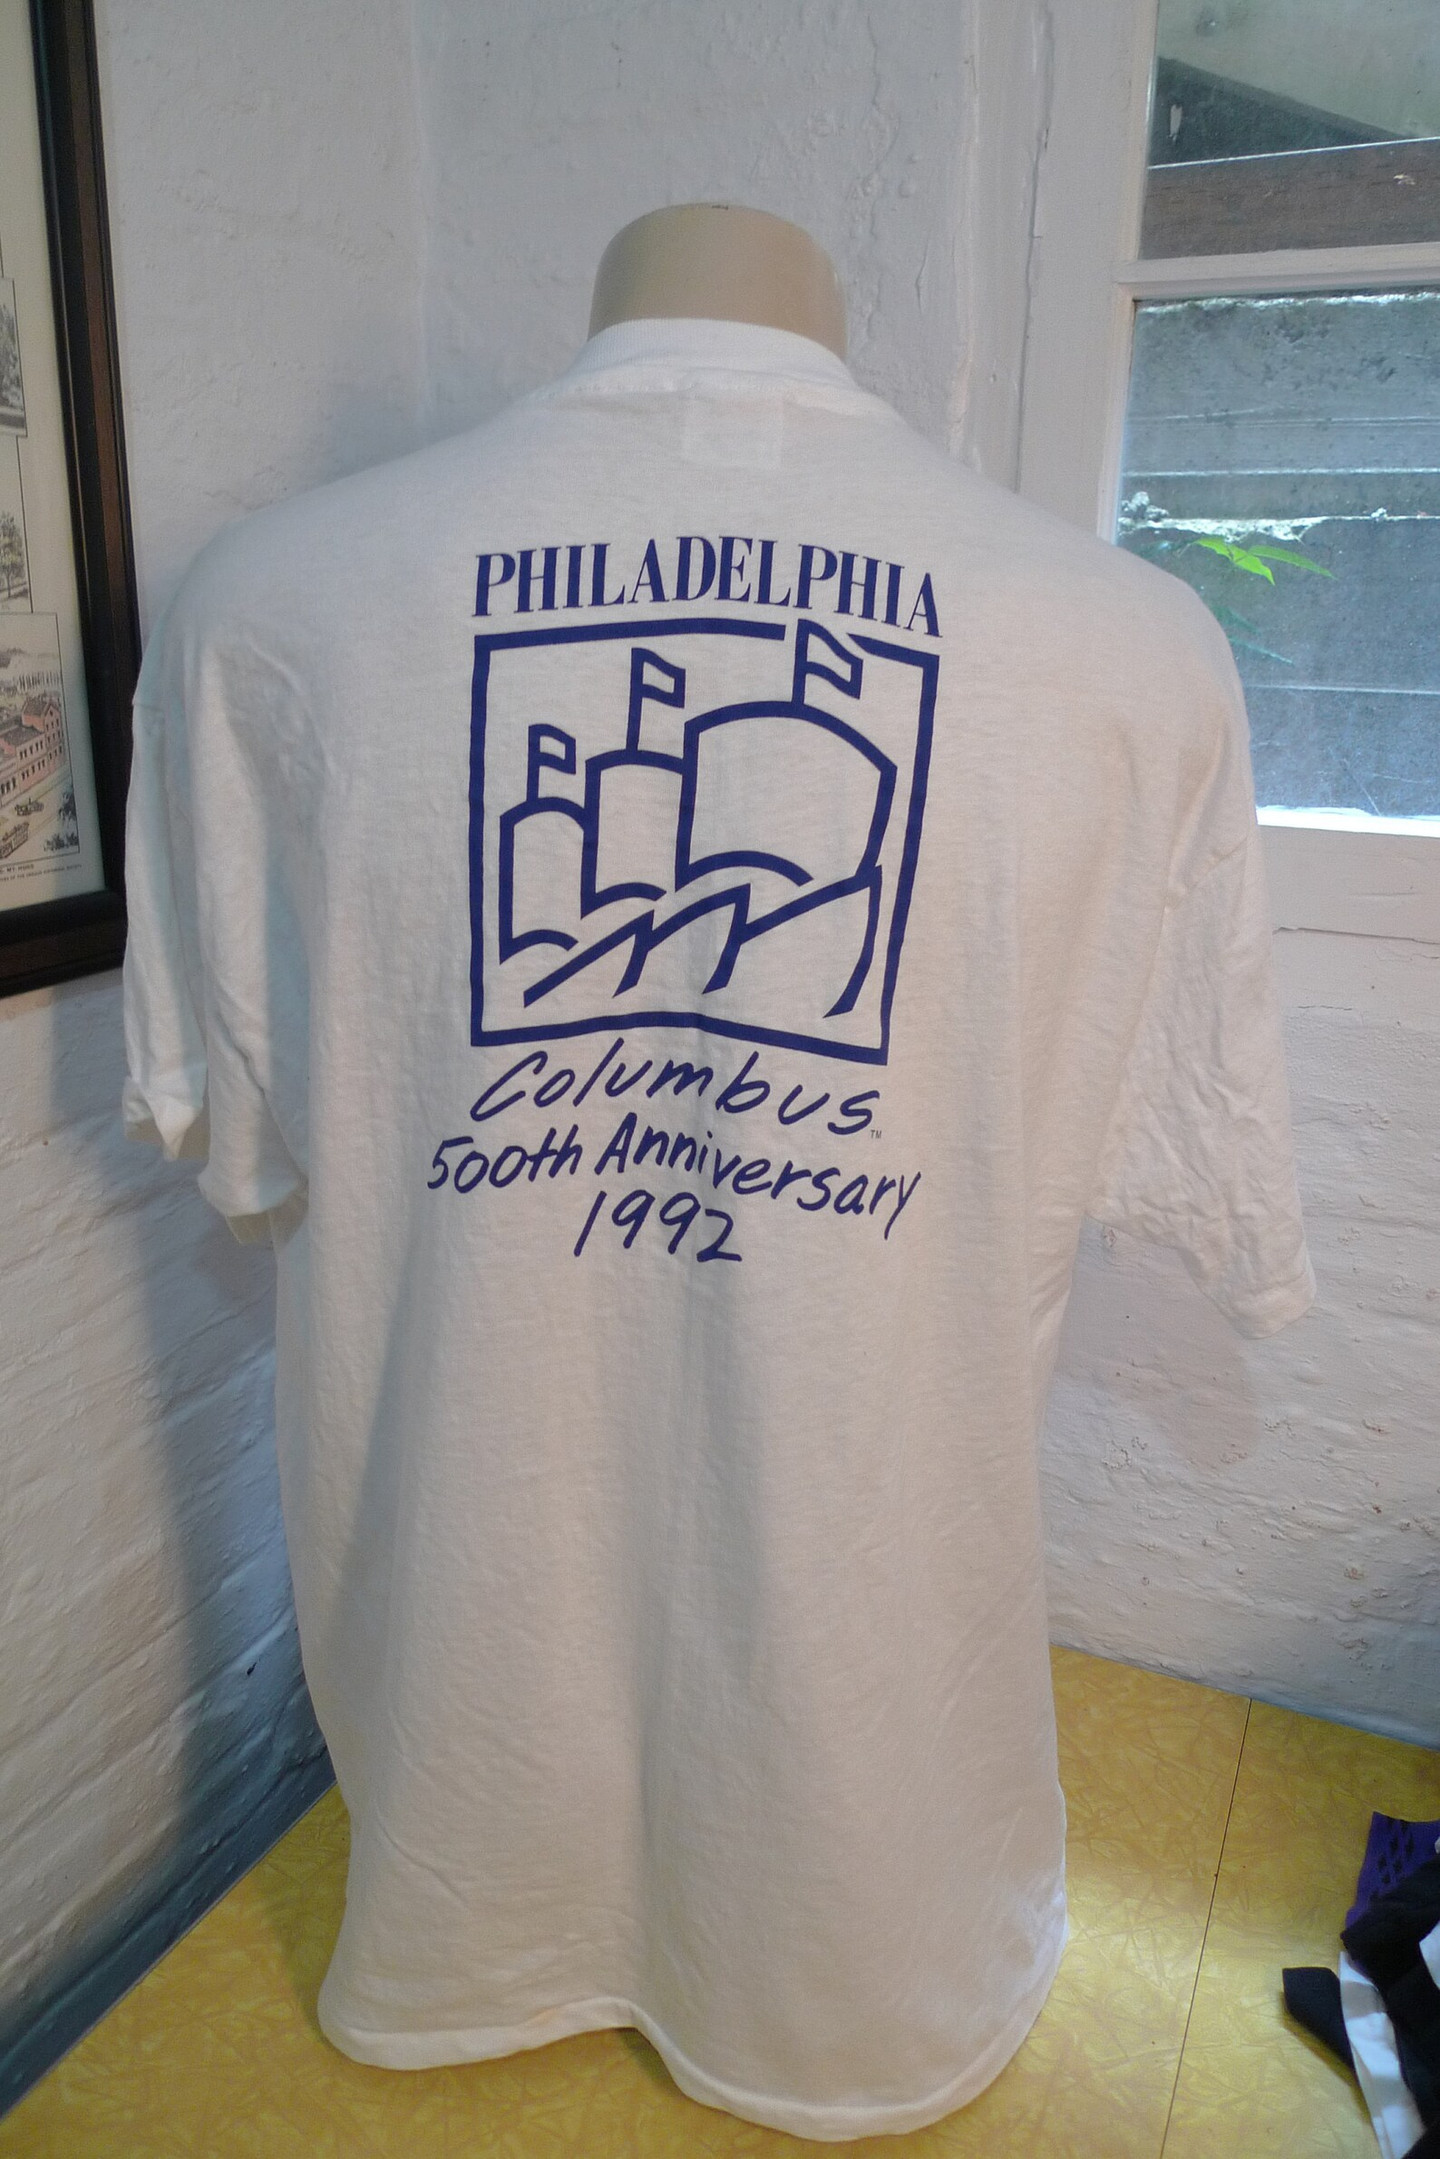 X 46 1992 Columbus 500th Anniversary Philadelphia Shirt Unworn